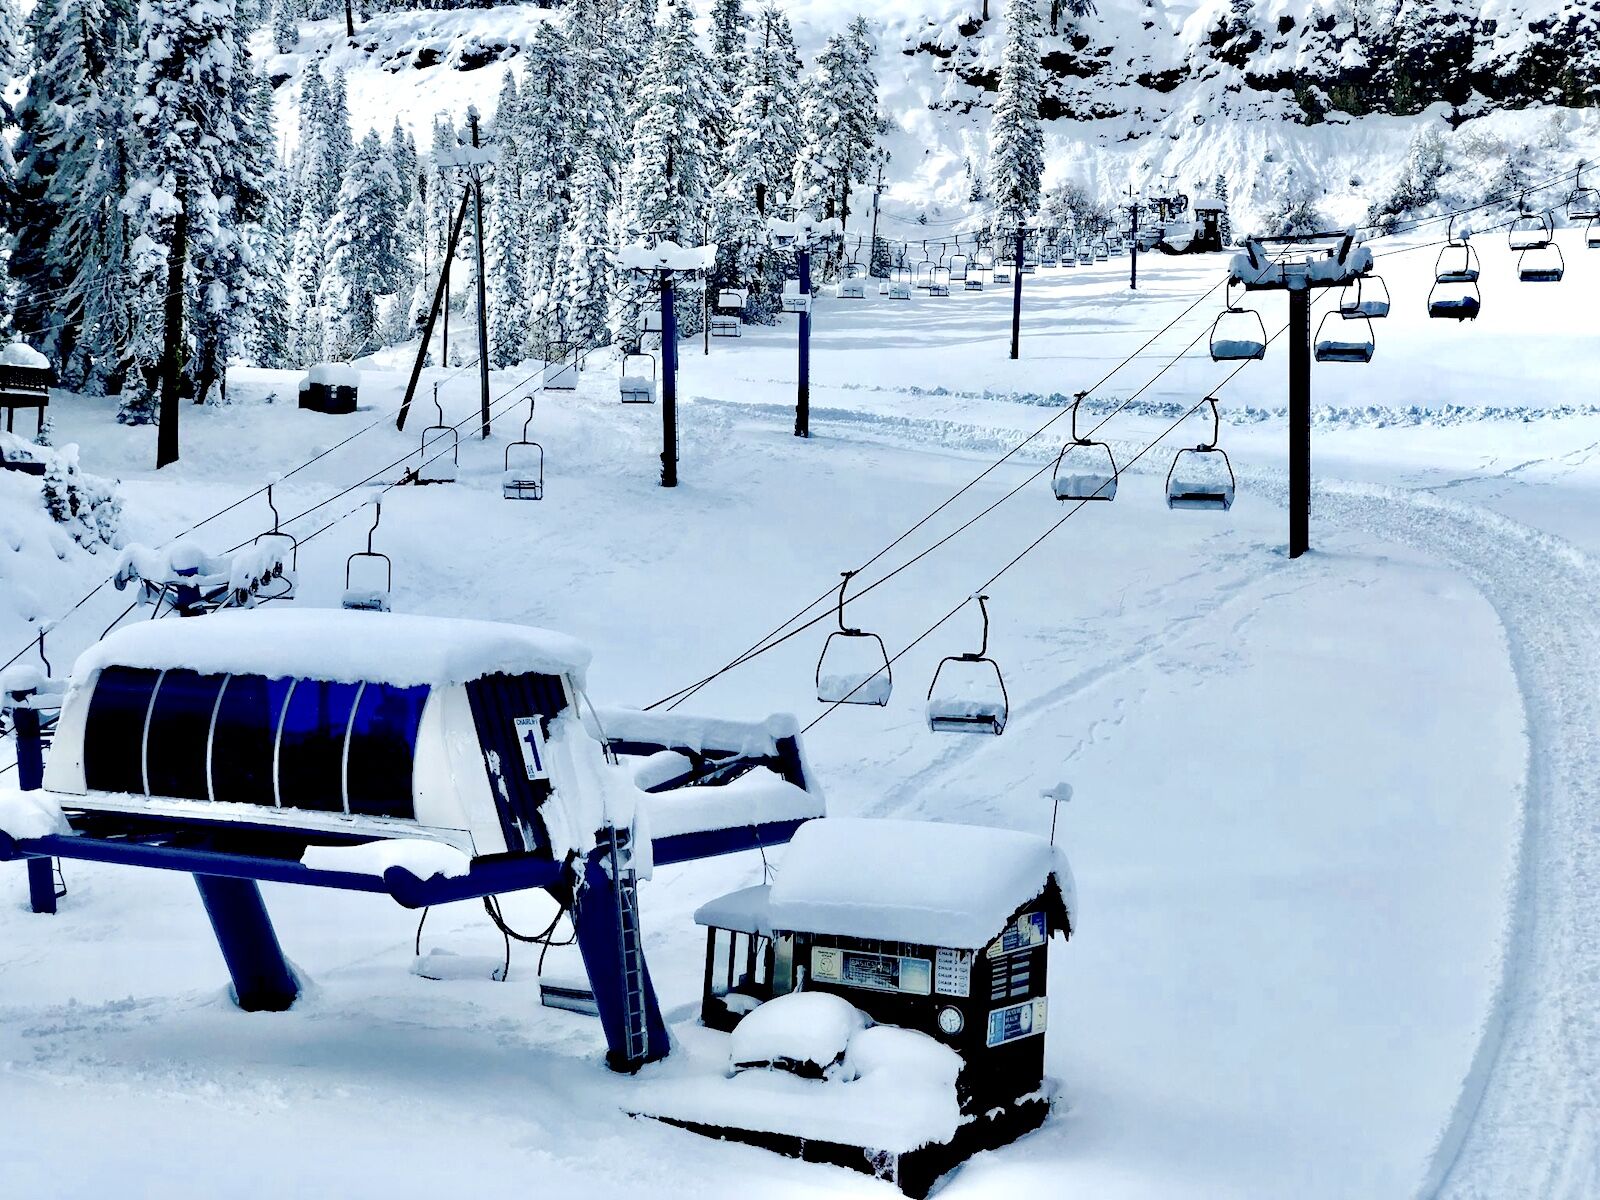 Lake Tahoe ski resorts - donner ranch covered in snow